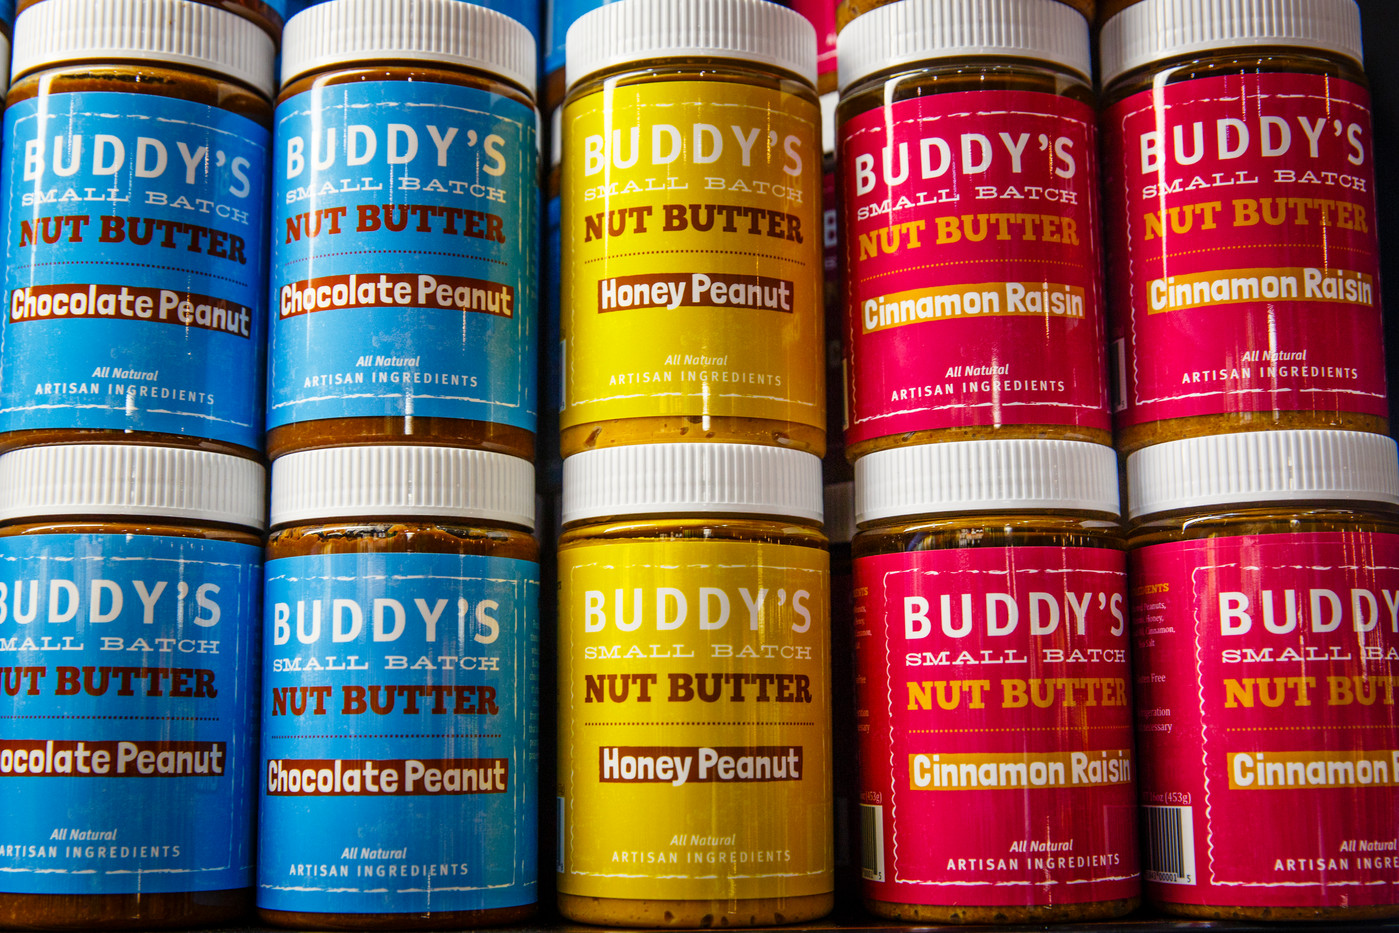 Buddy's Nut Butter